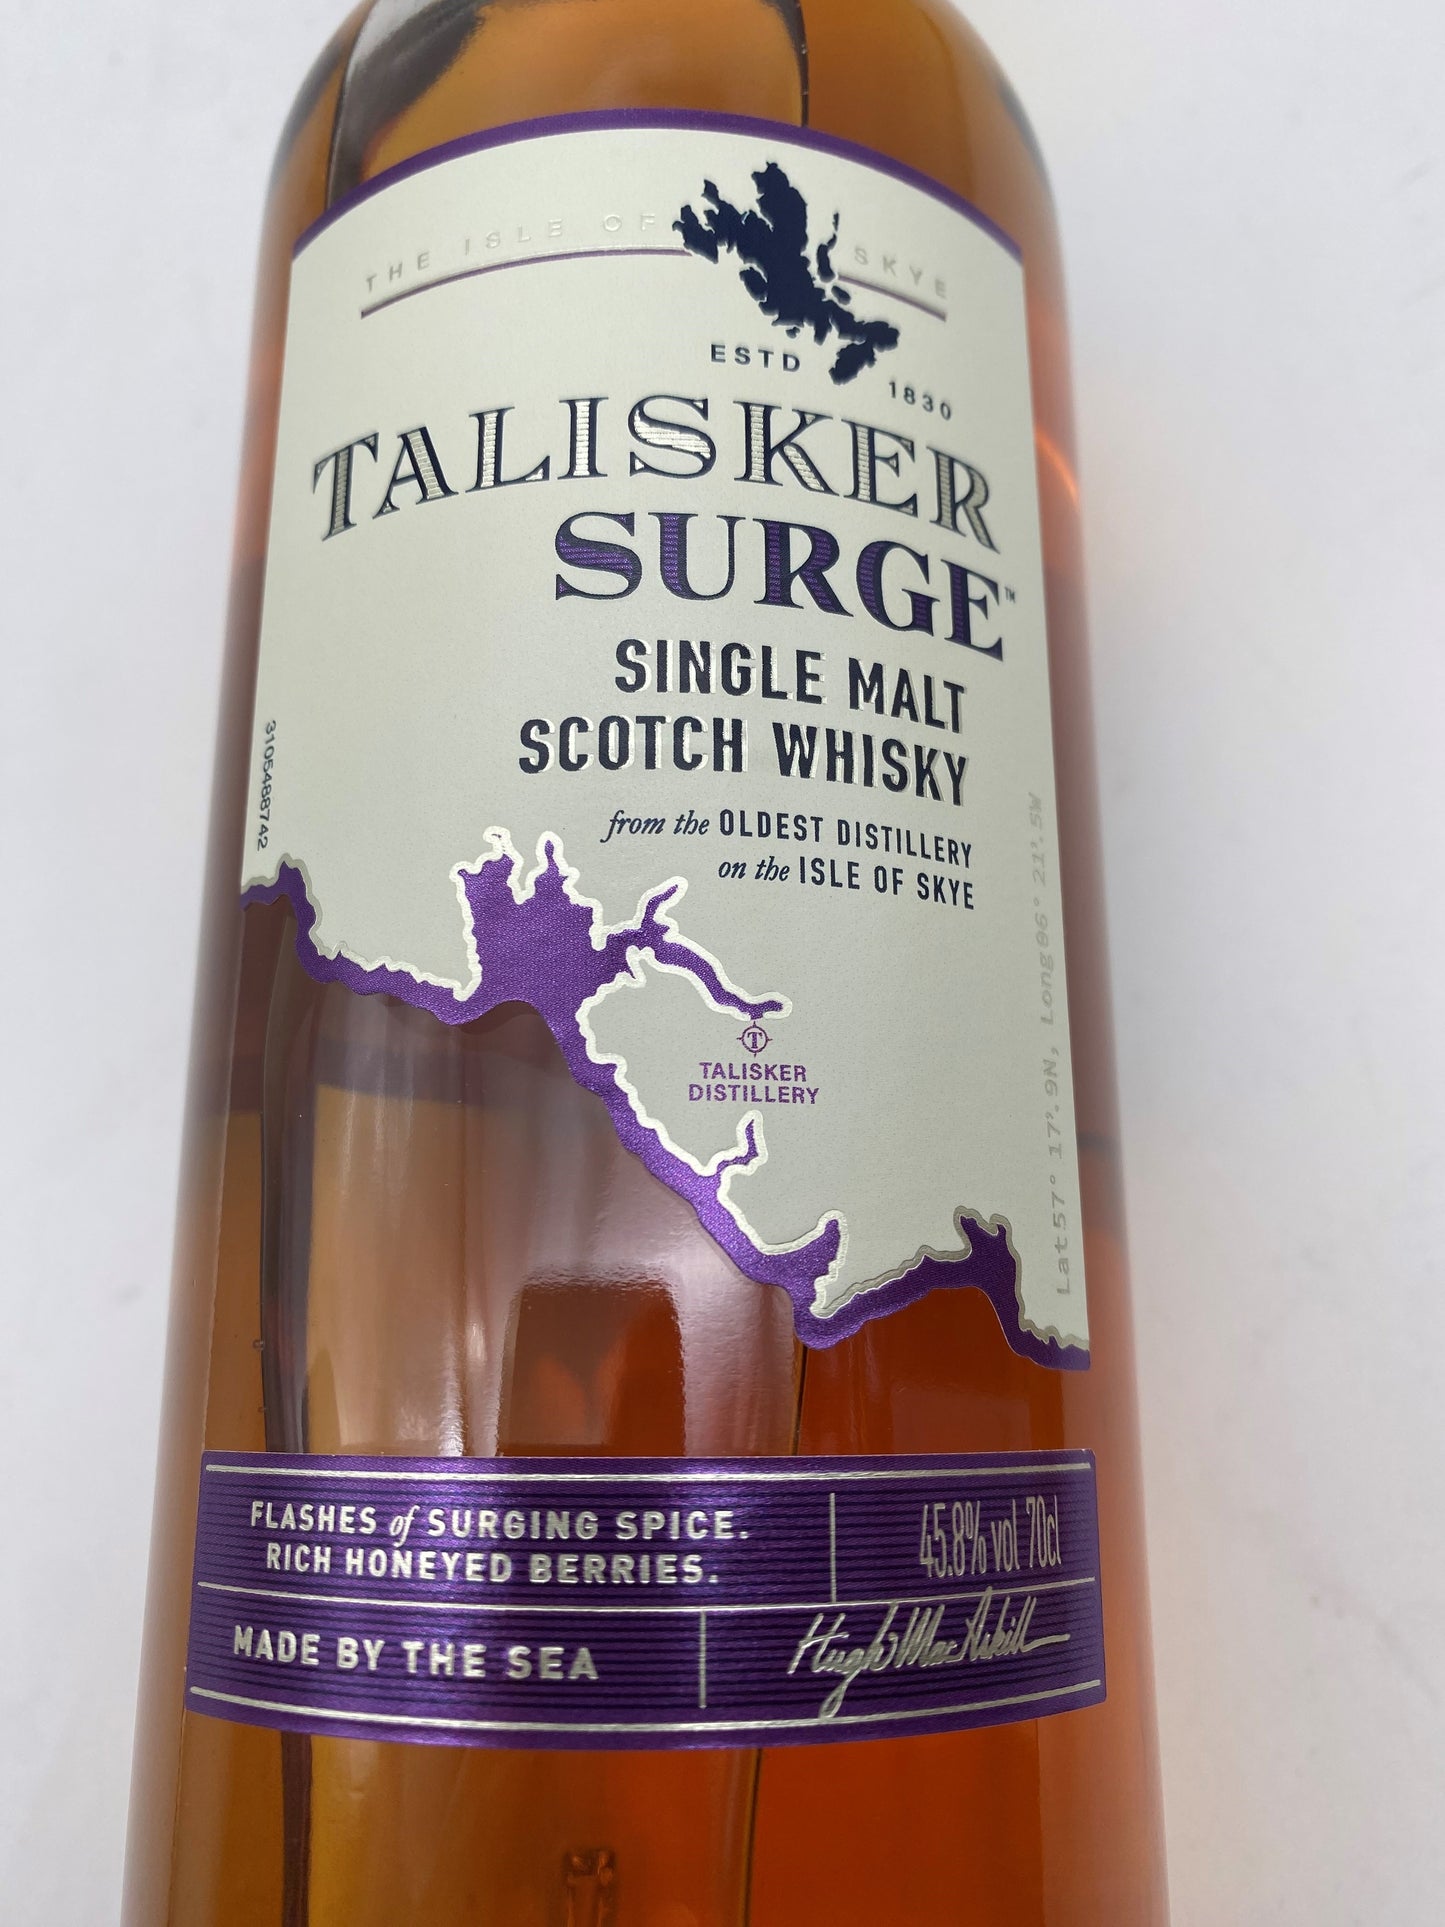 Talisker Surge Single Malt Scotch Whisky